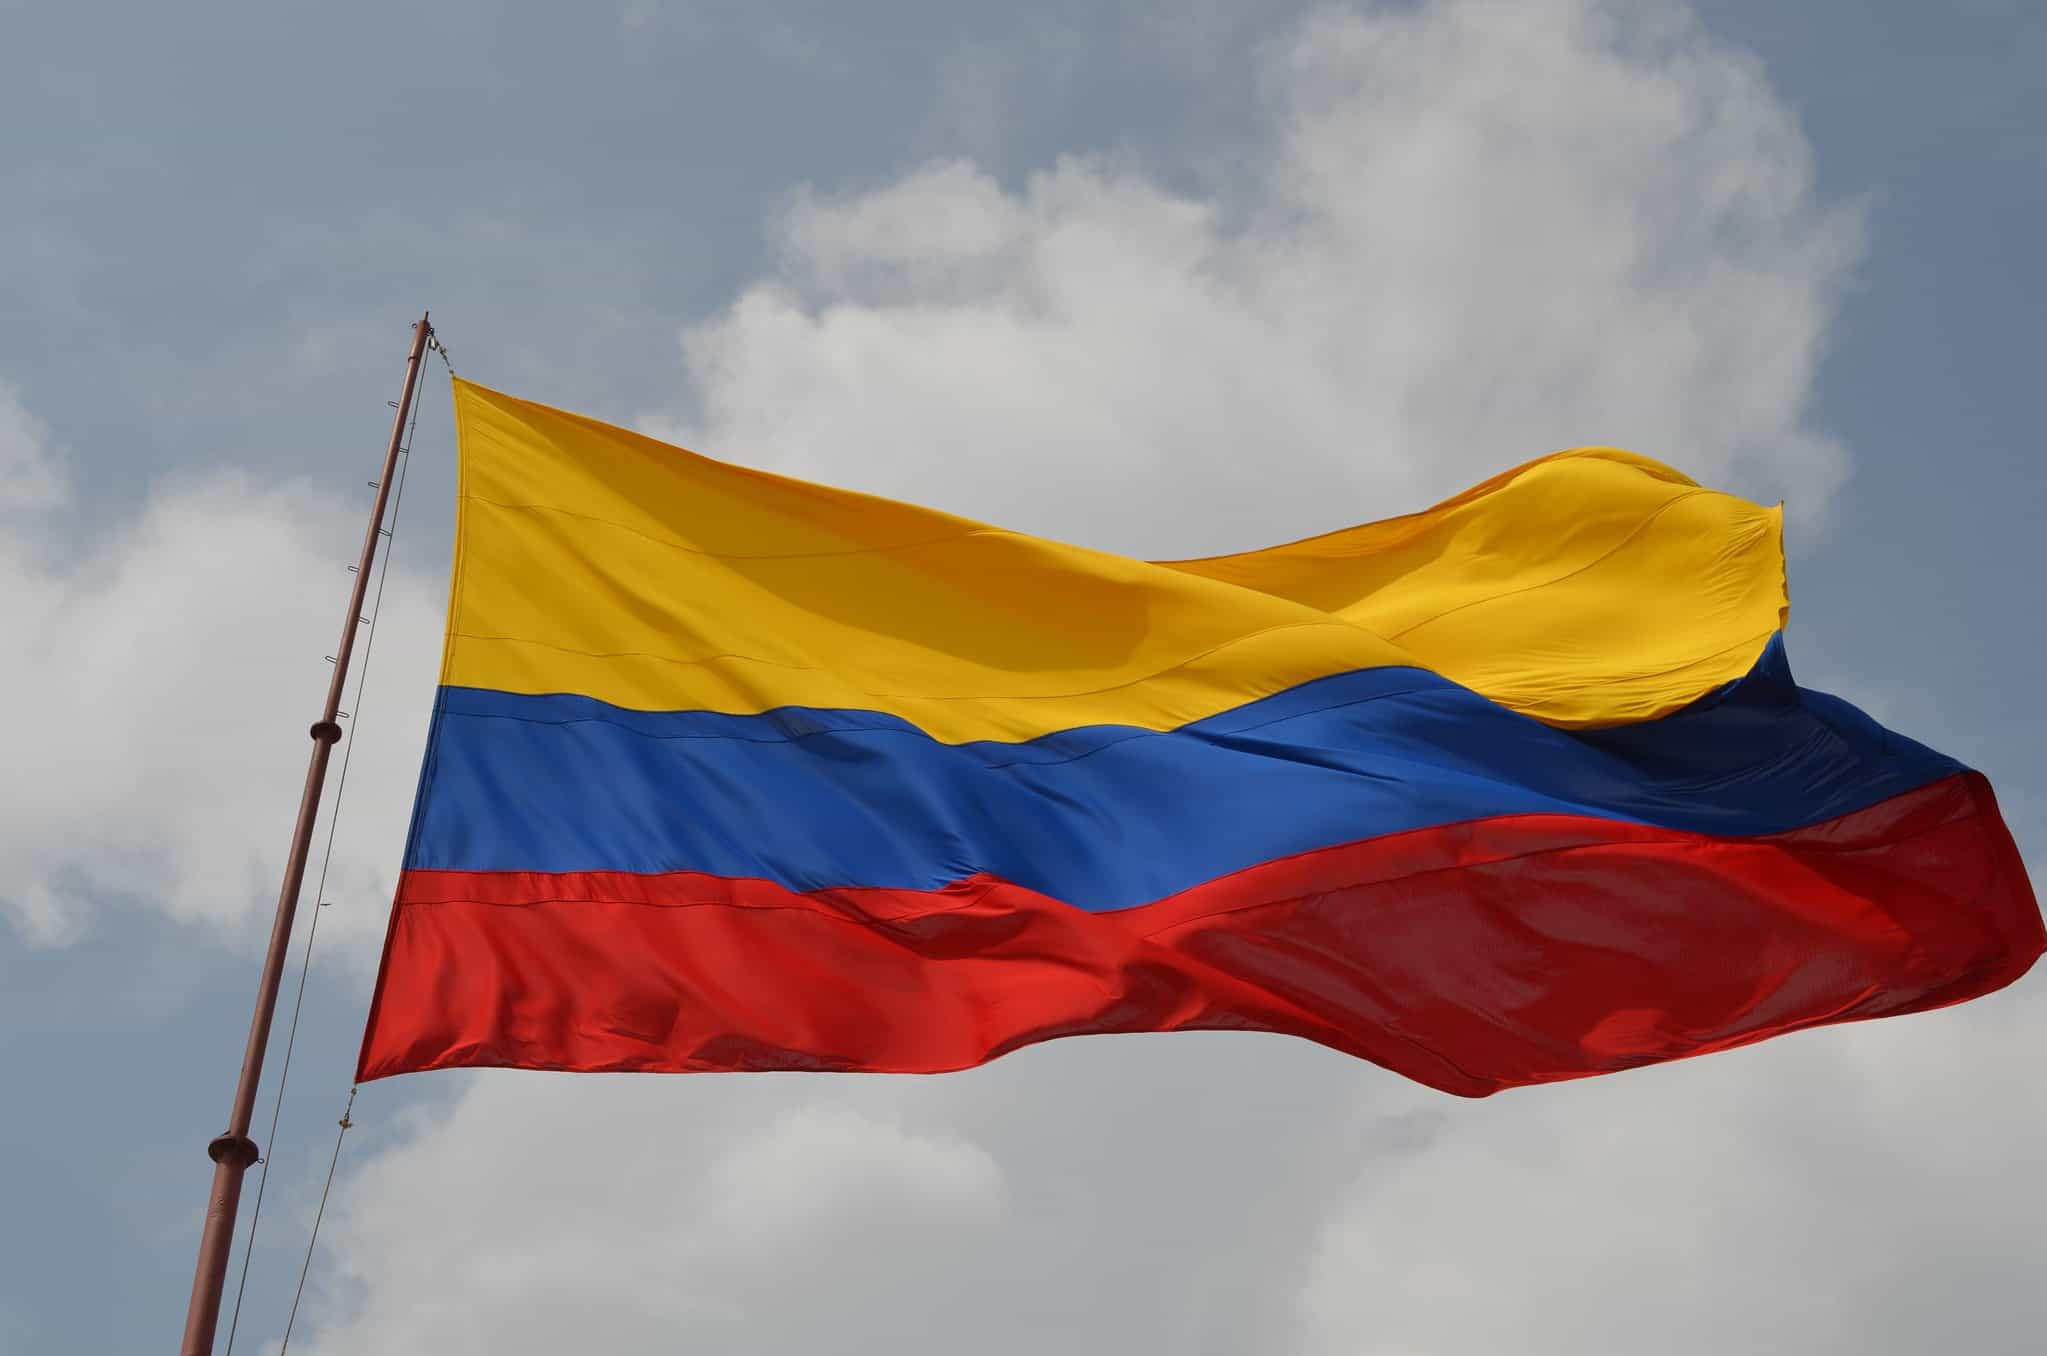 Cumbia recieves cultural heritage status in Colombia